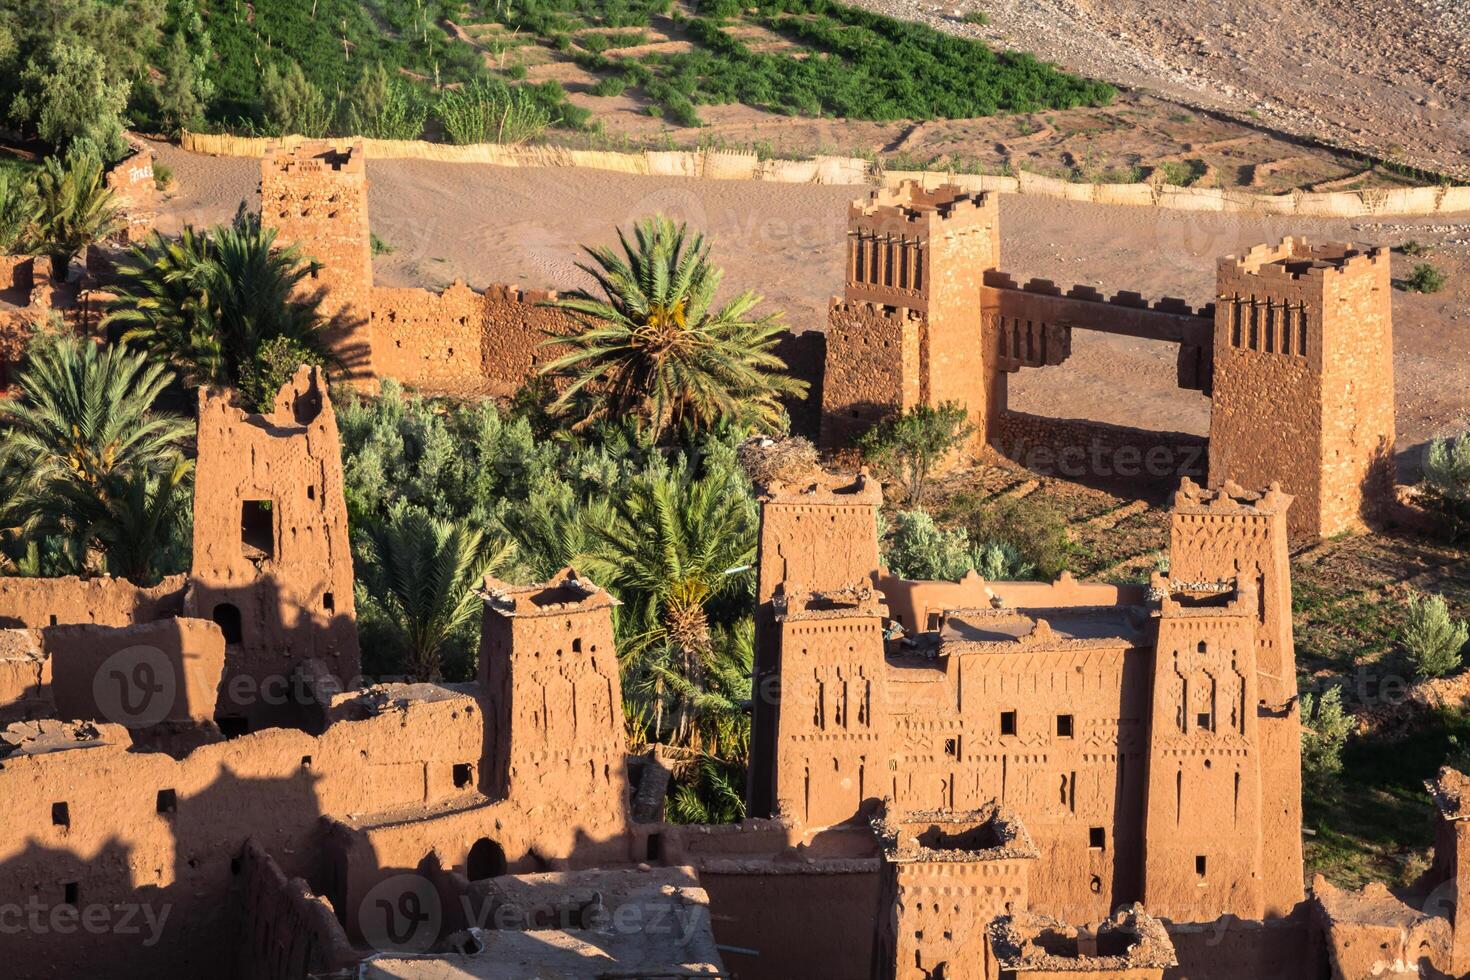 View of Ait Benhaddou Kasbah, Ait Ben Haddou, Ouarzazate, Morocco photo